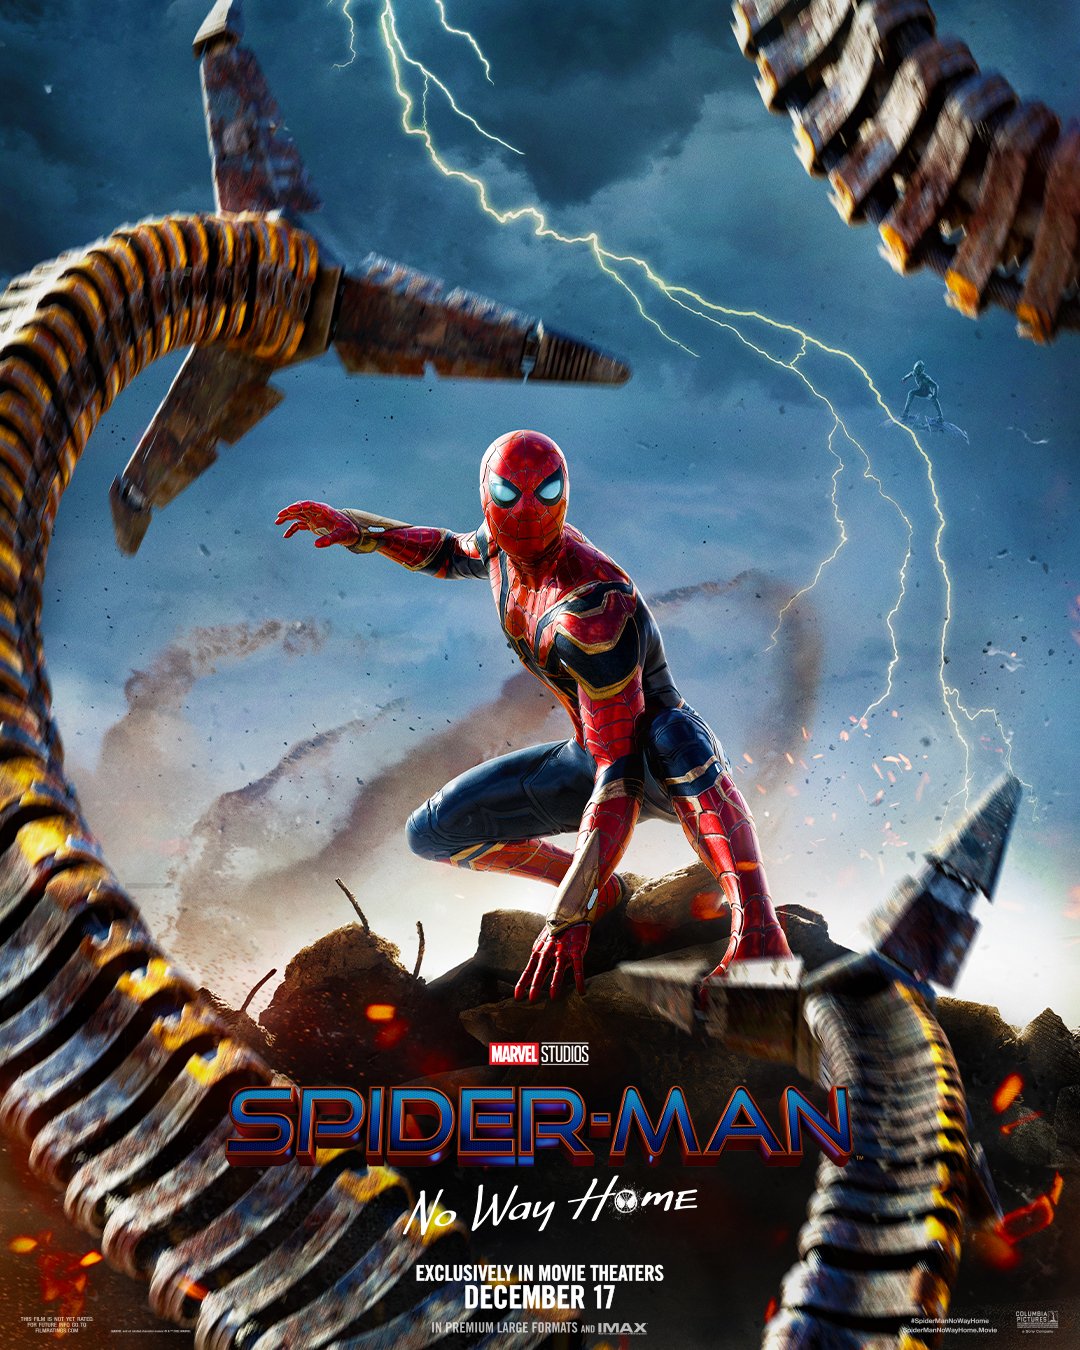 Spider-Man: No Way Home - Poster 1